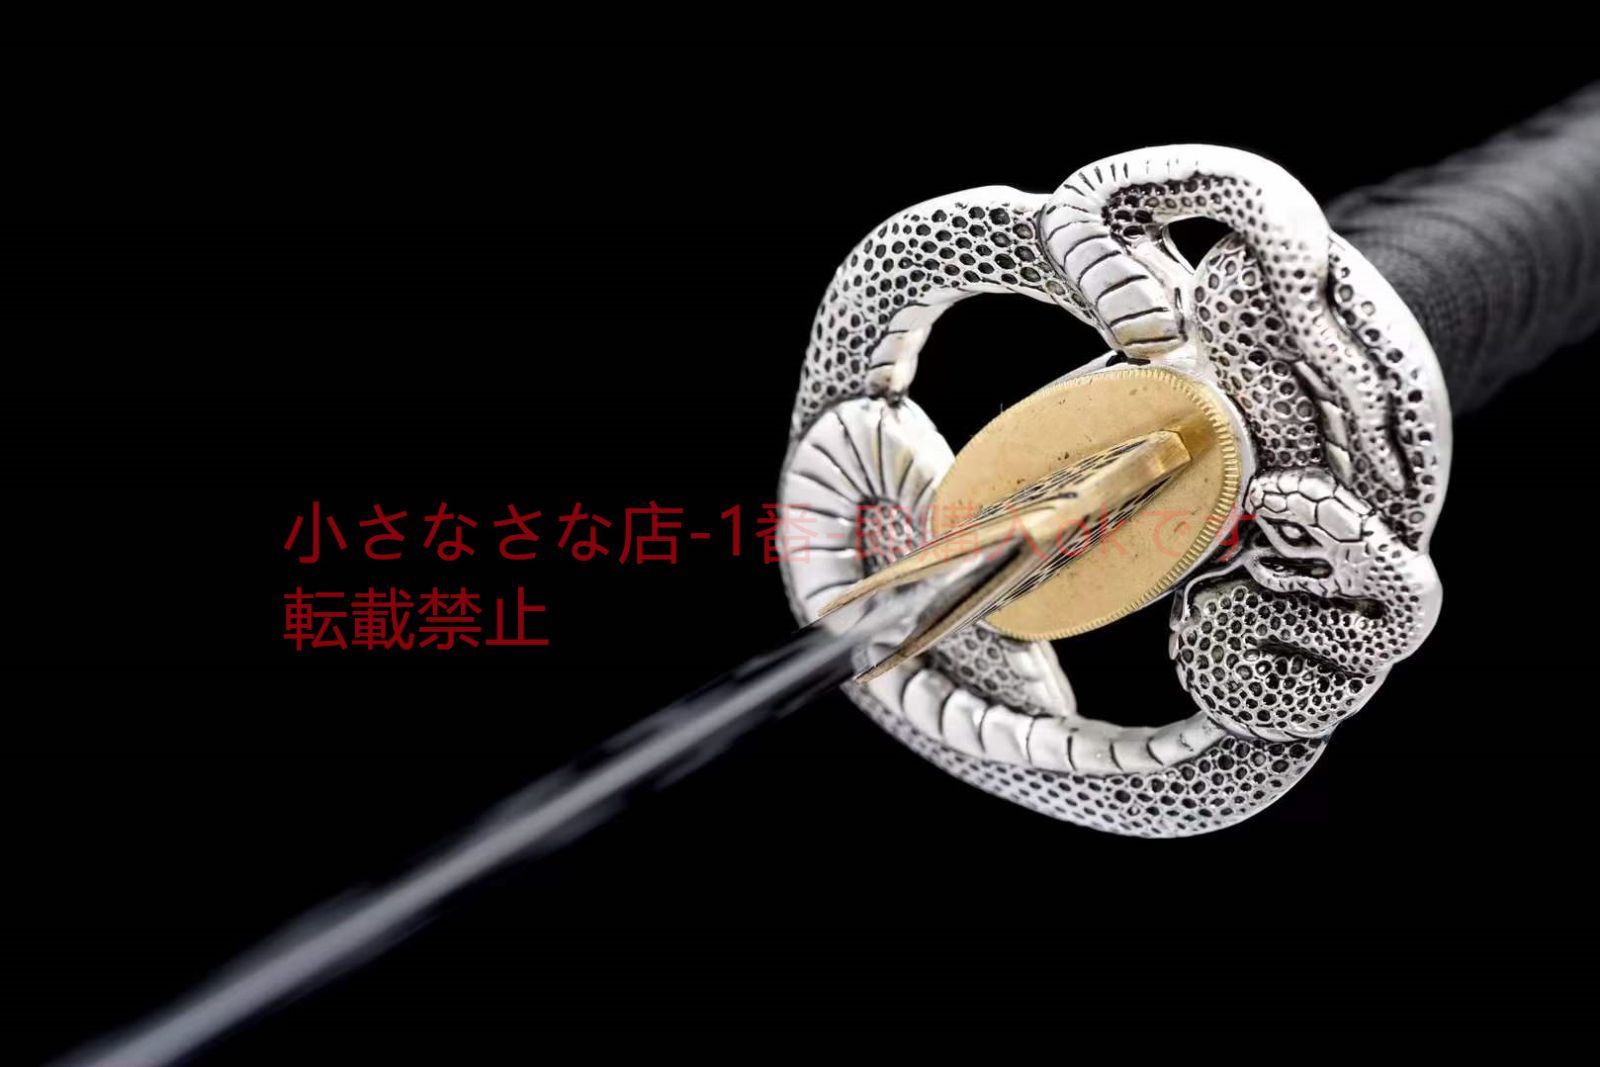 高性能サムライナイフ【天蛇】武具 刀装具 日本刀 模造刀 居合刀 